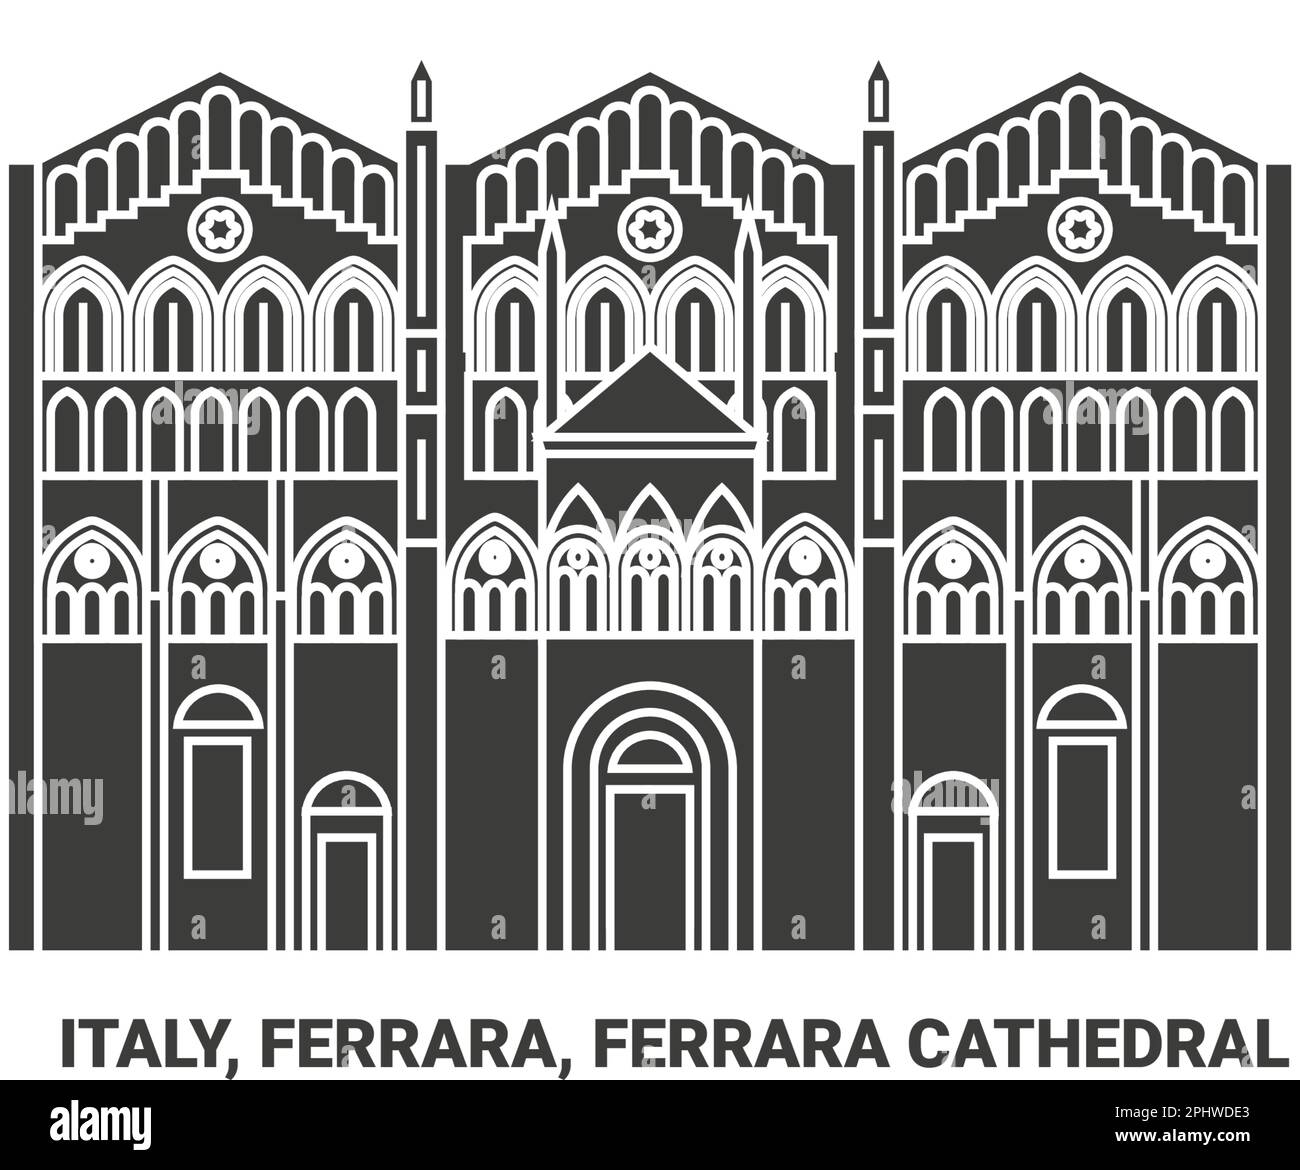 Italien, Ferrara, Ferrara Kathedrale reisen Wahrzeichen Vektordarstellung Stock Vektor